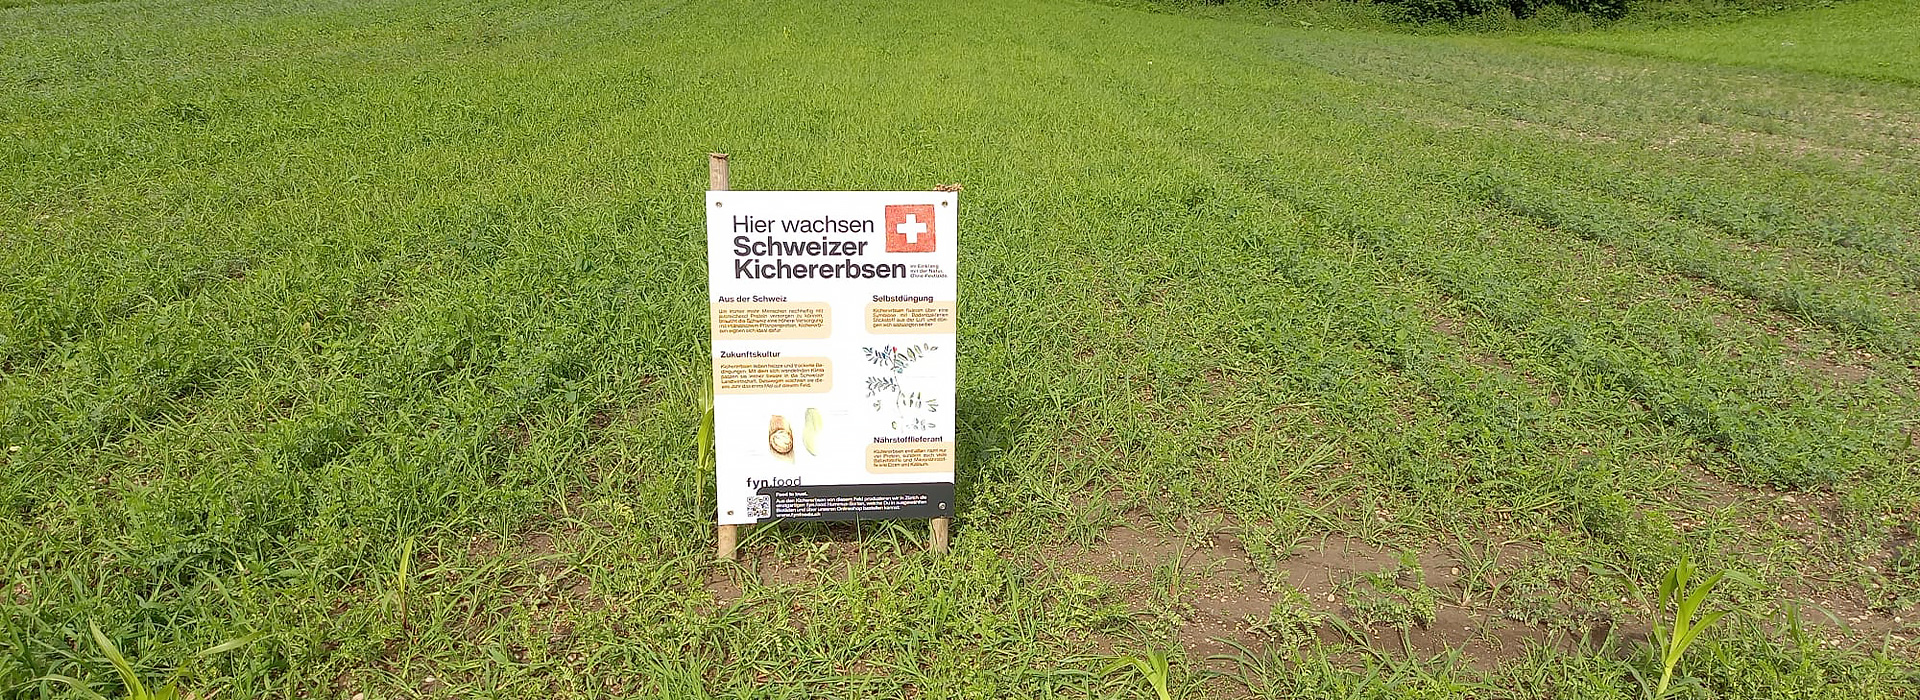 Lebenshof KuhErde - Kichererbsenanbau